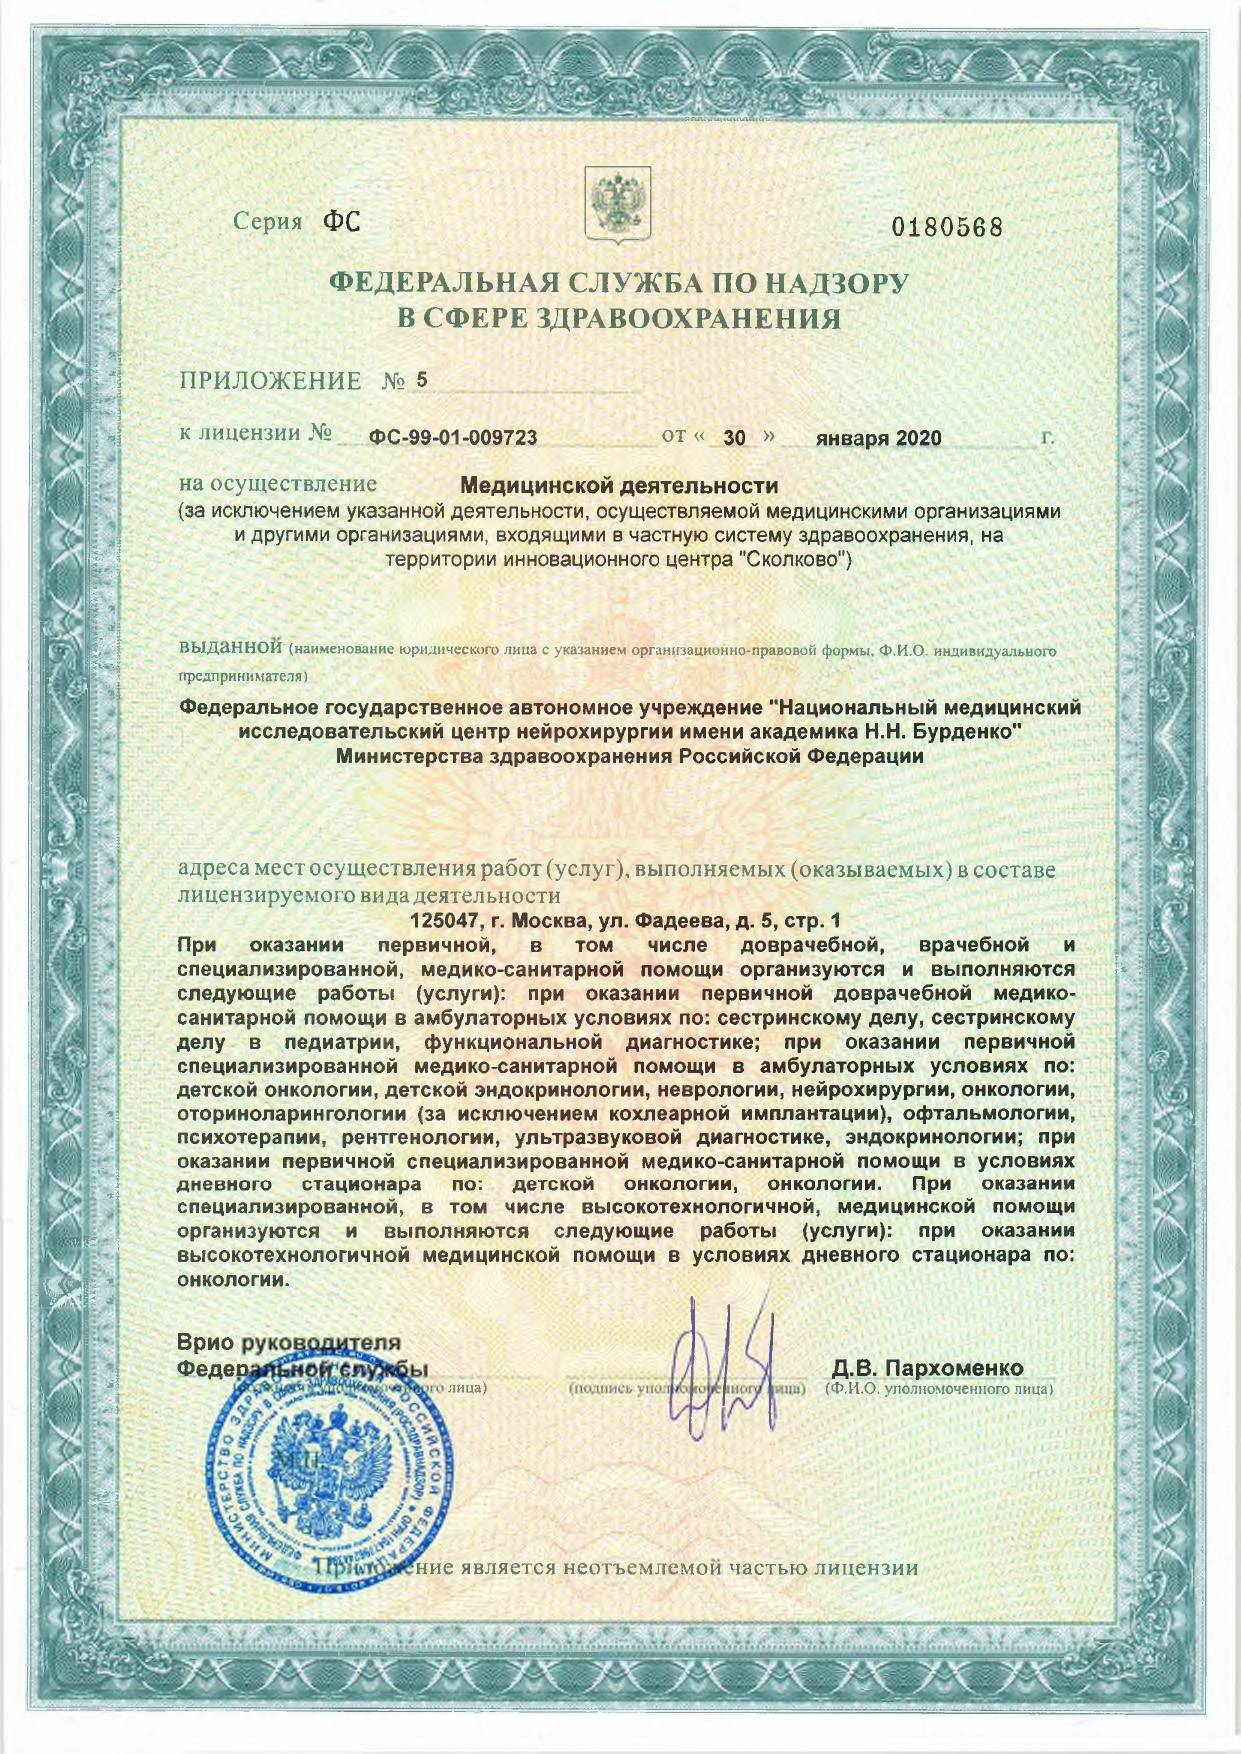 Институт нейрохирургии имени академика Н. Н. Бурденко лицензия №8